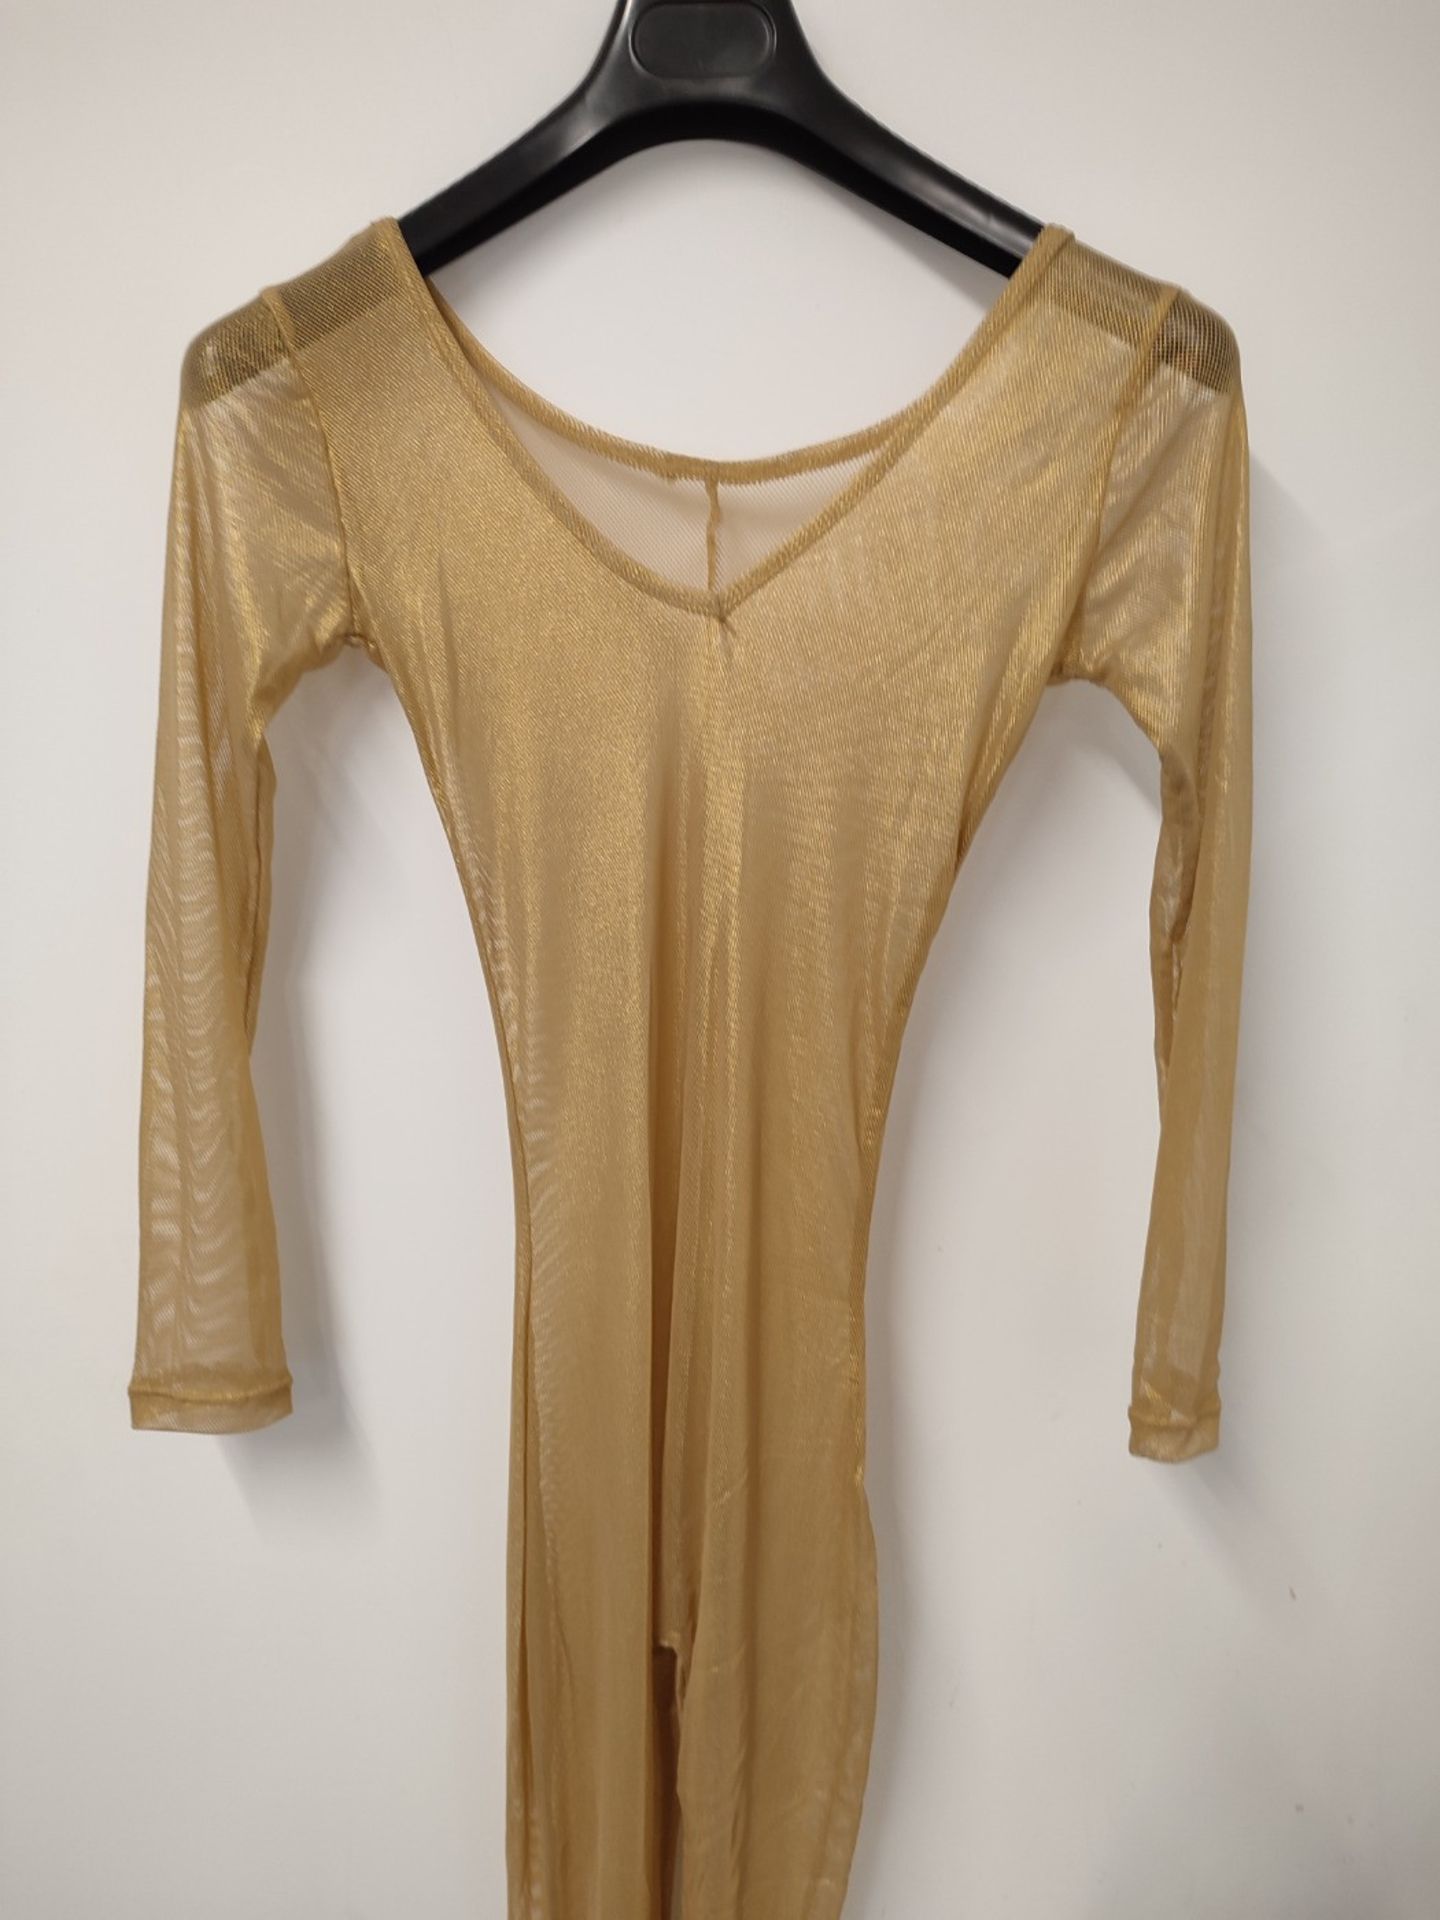 RRP £68.00 Leg Avenue 85578 White/Gold Goddess Fancy Dress Costume (Small/UK 6-8, 3-Piece), Size: - Image 3 of 3